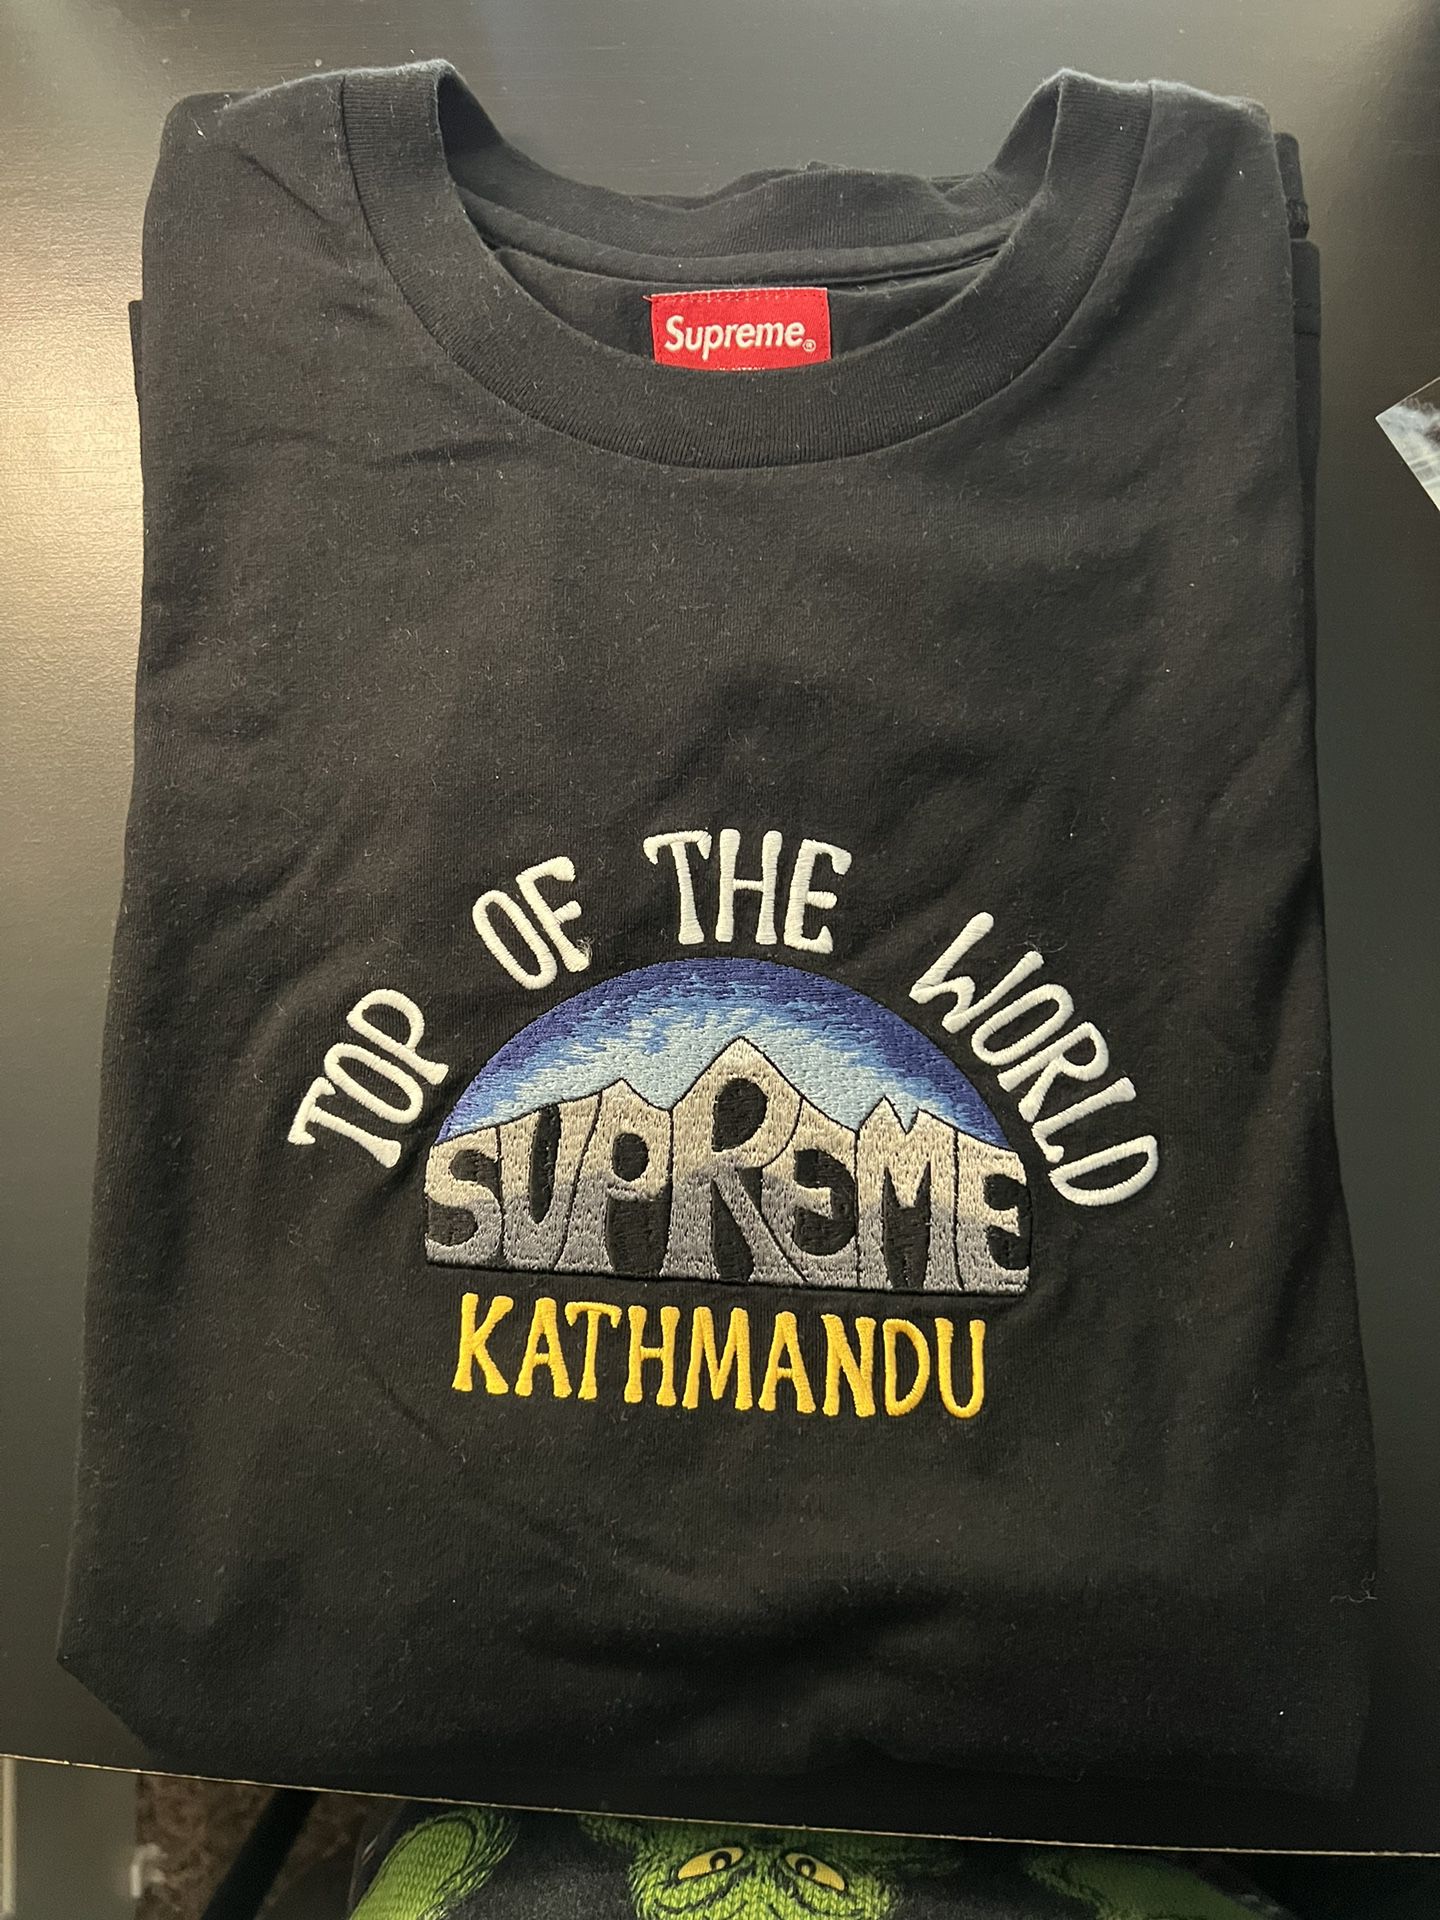 Supreme T-shirt Top Of The World Kathmandu